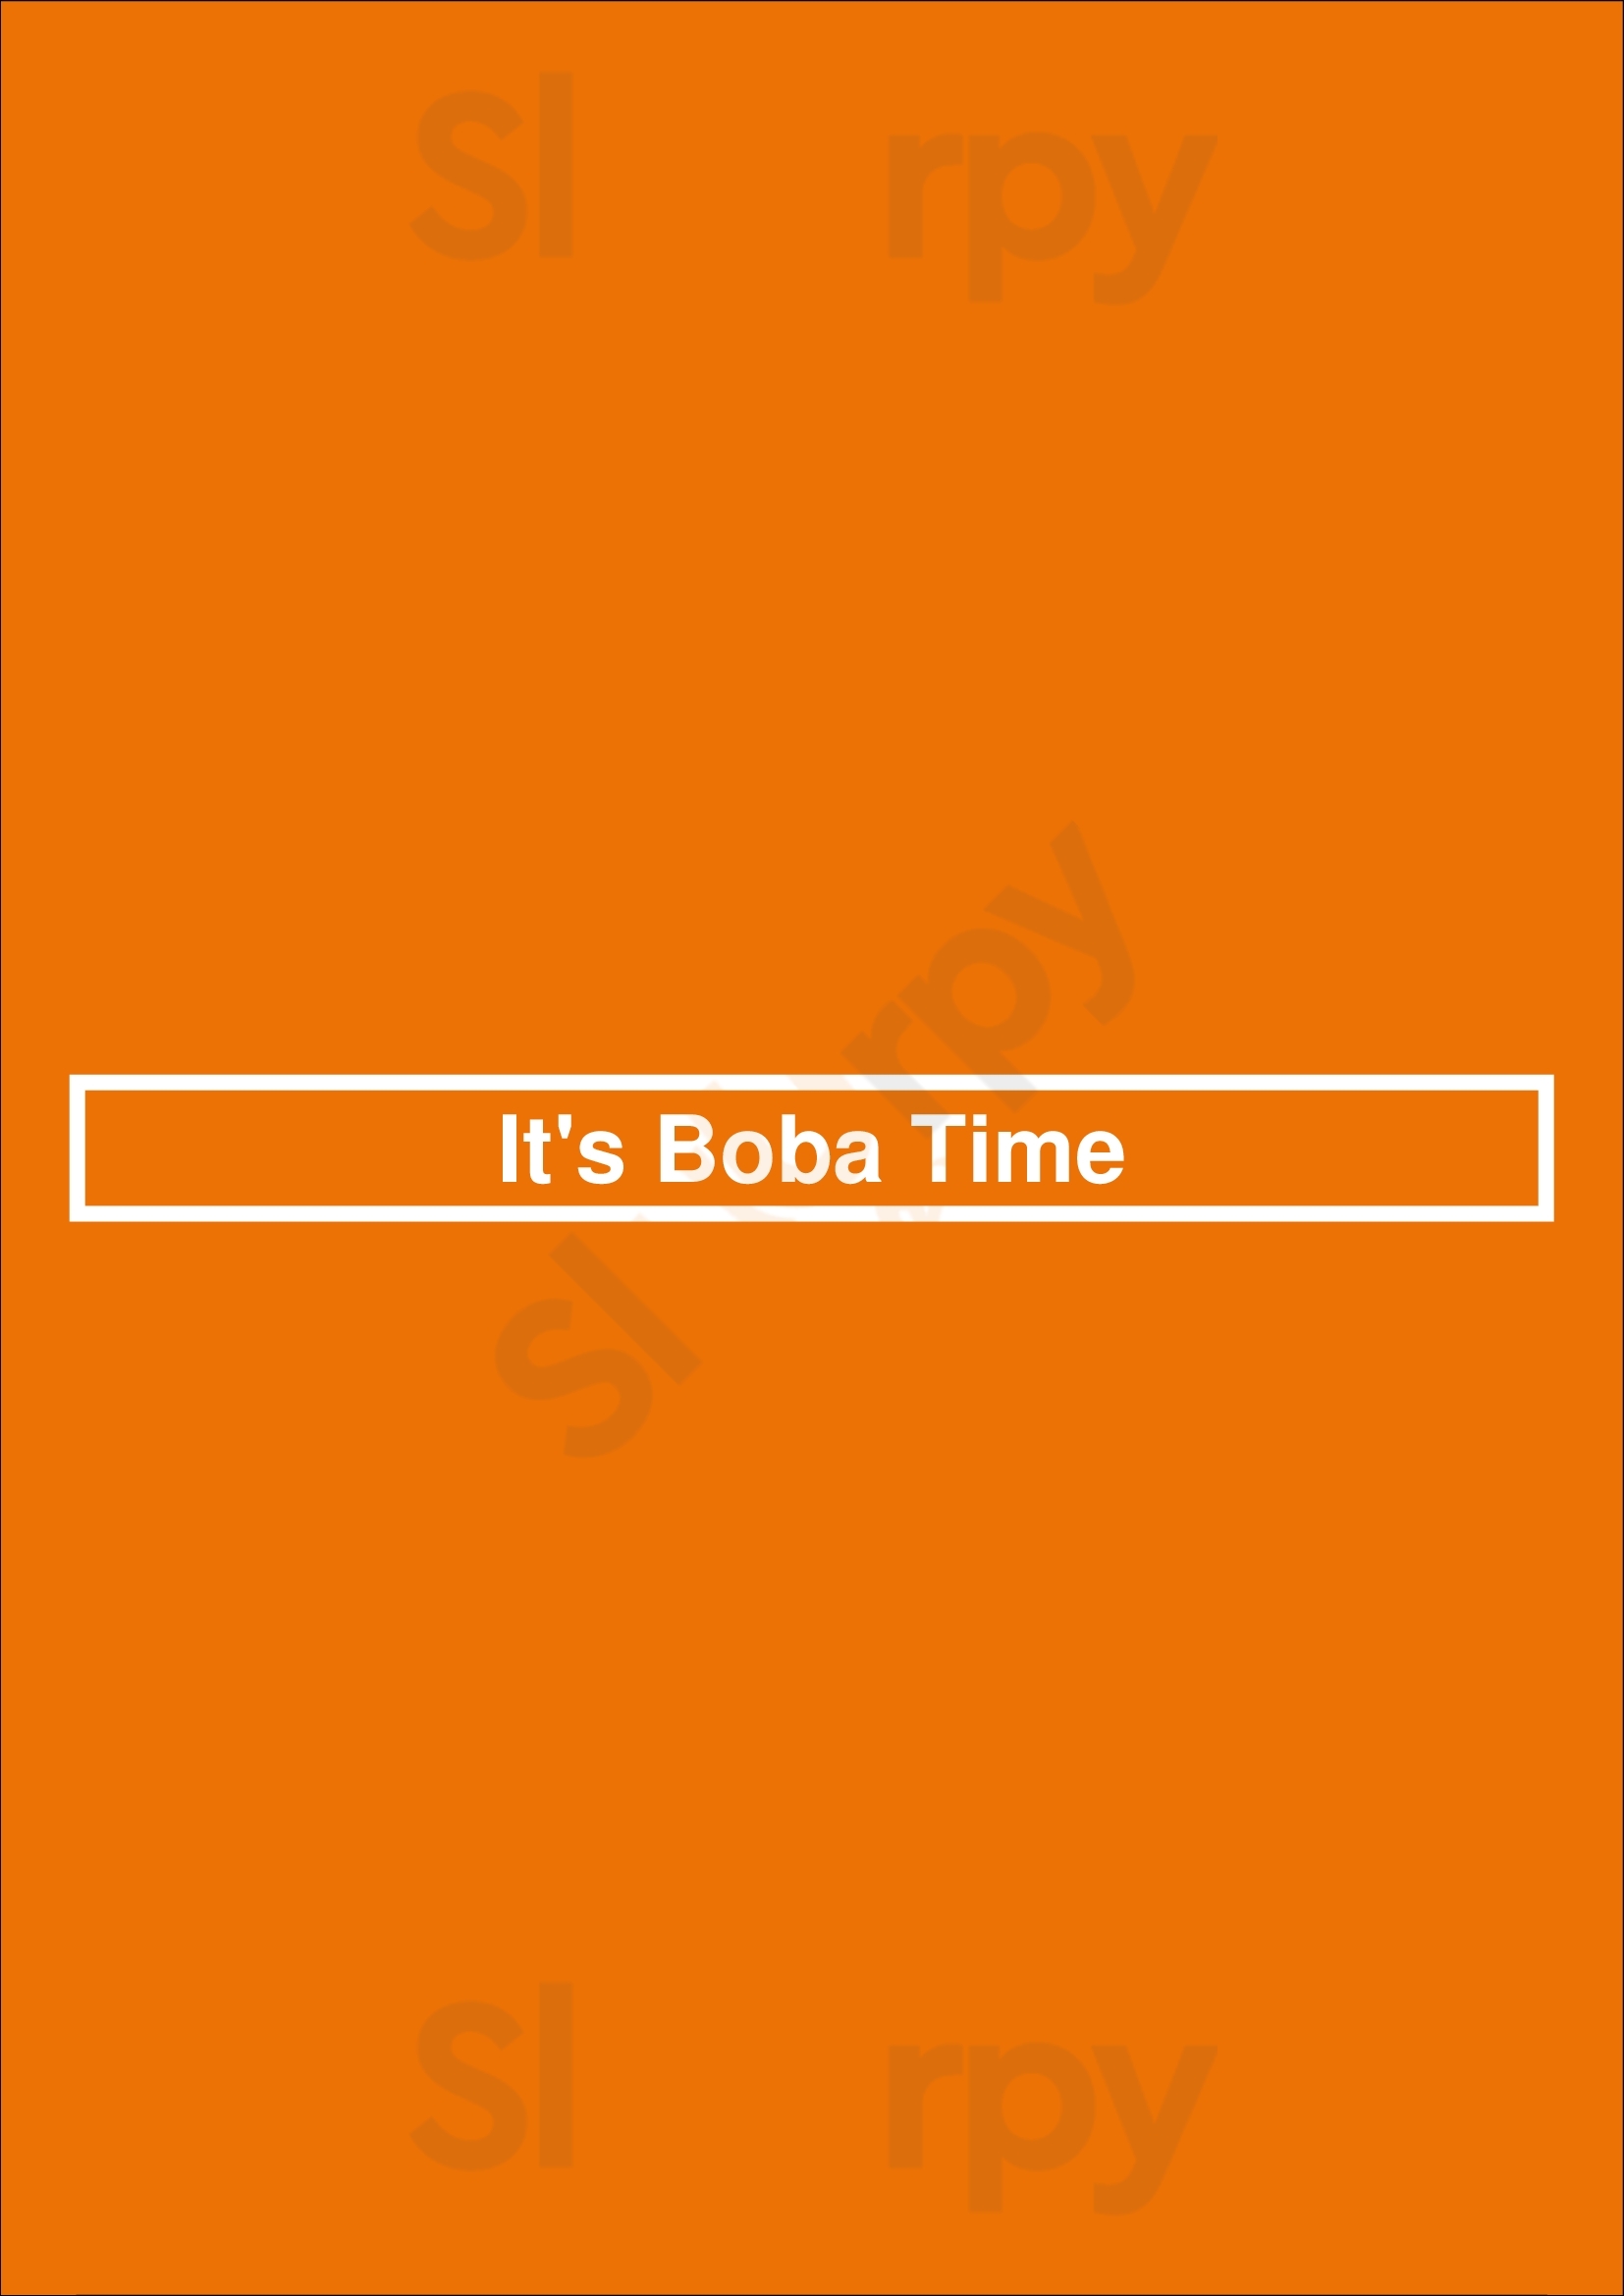 It's Boba Time Los Angeles Menu - 1